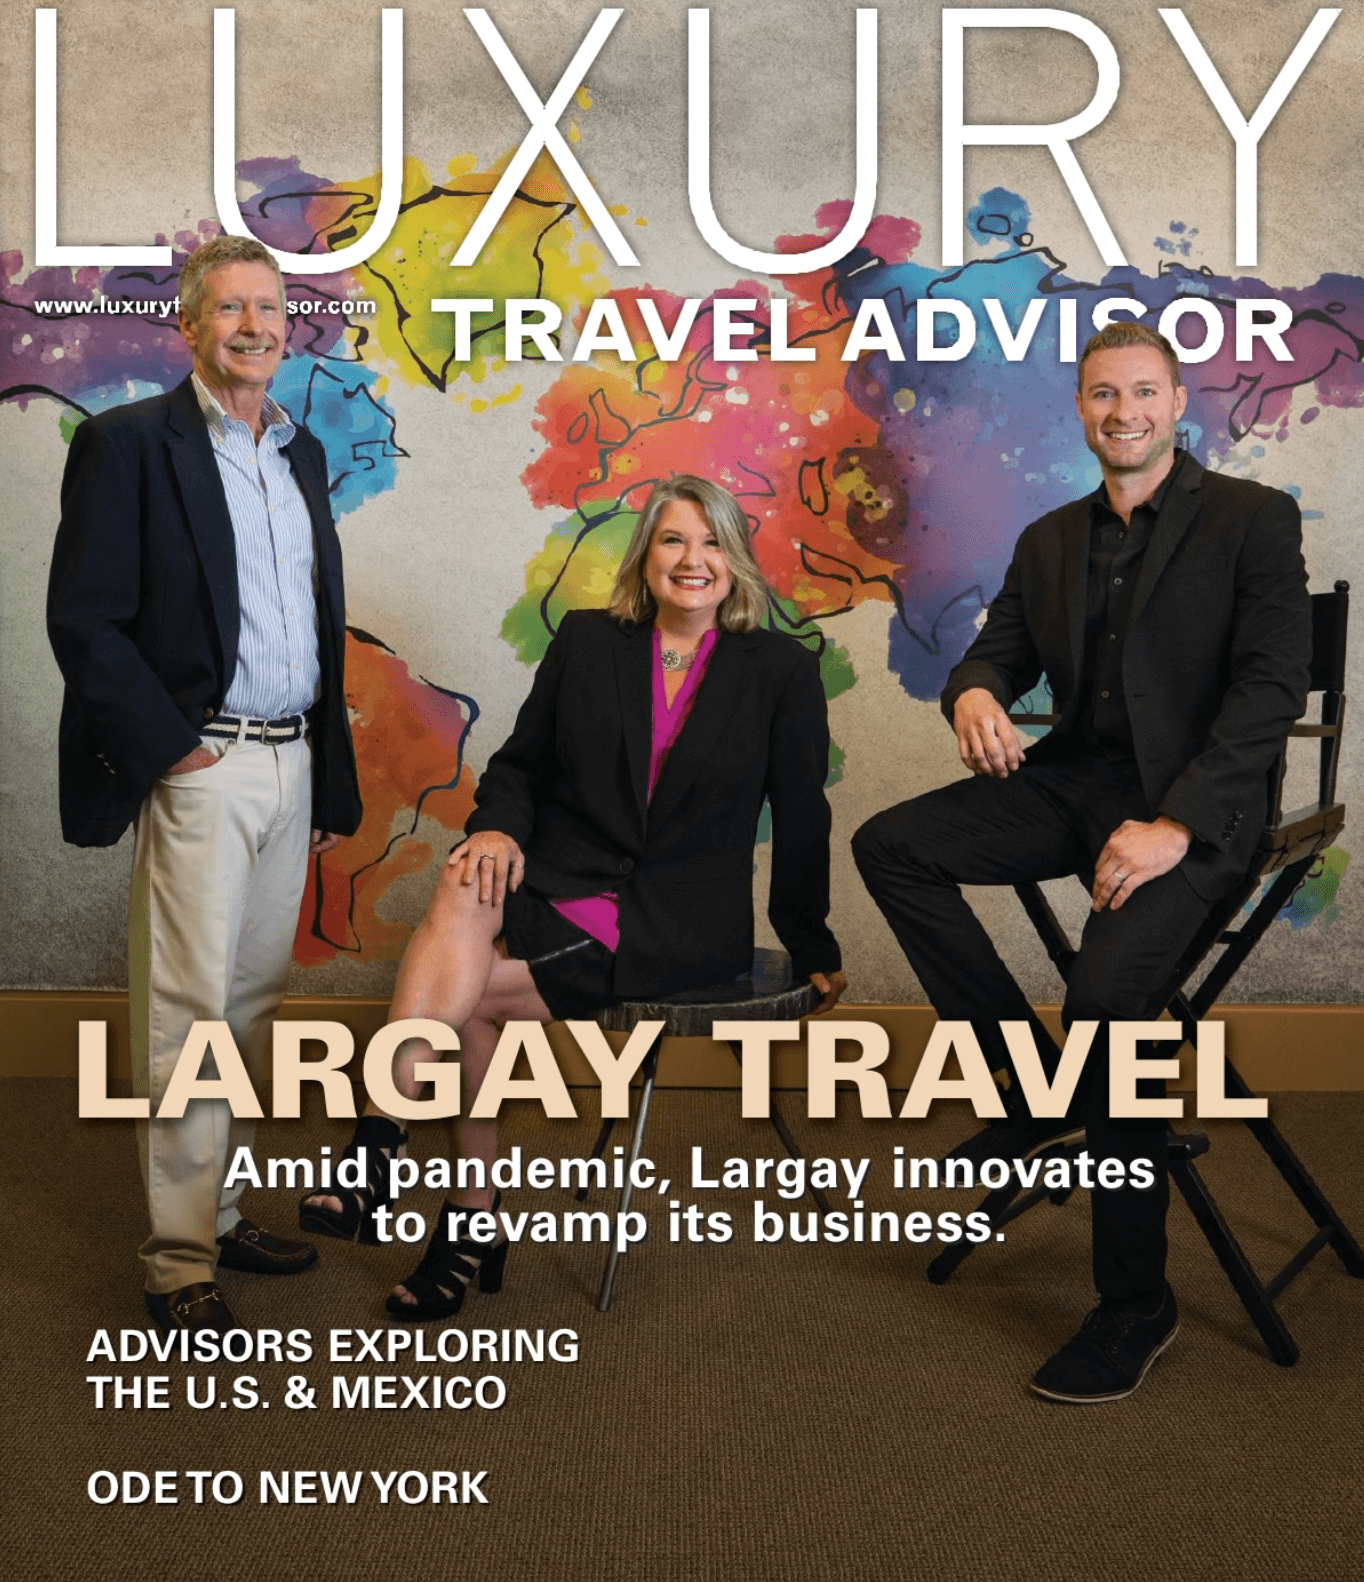 luxury travel advisor agency